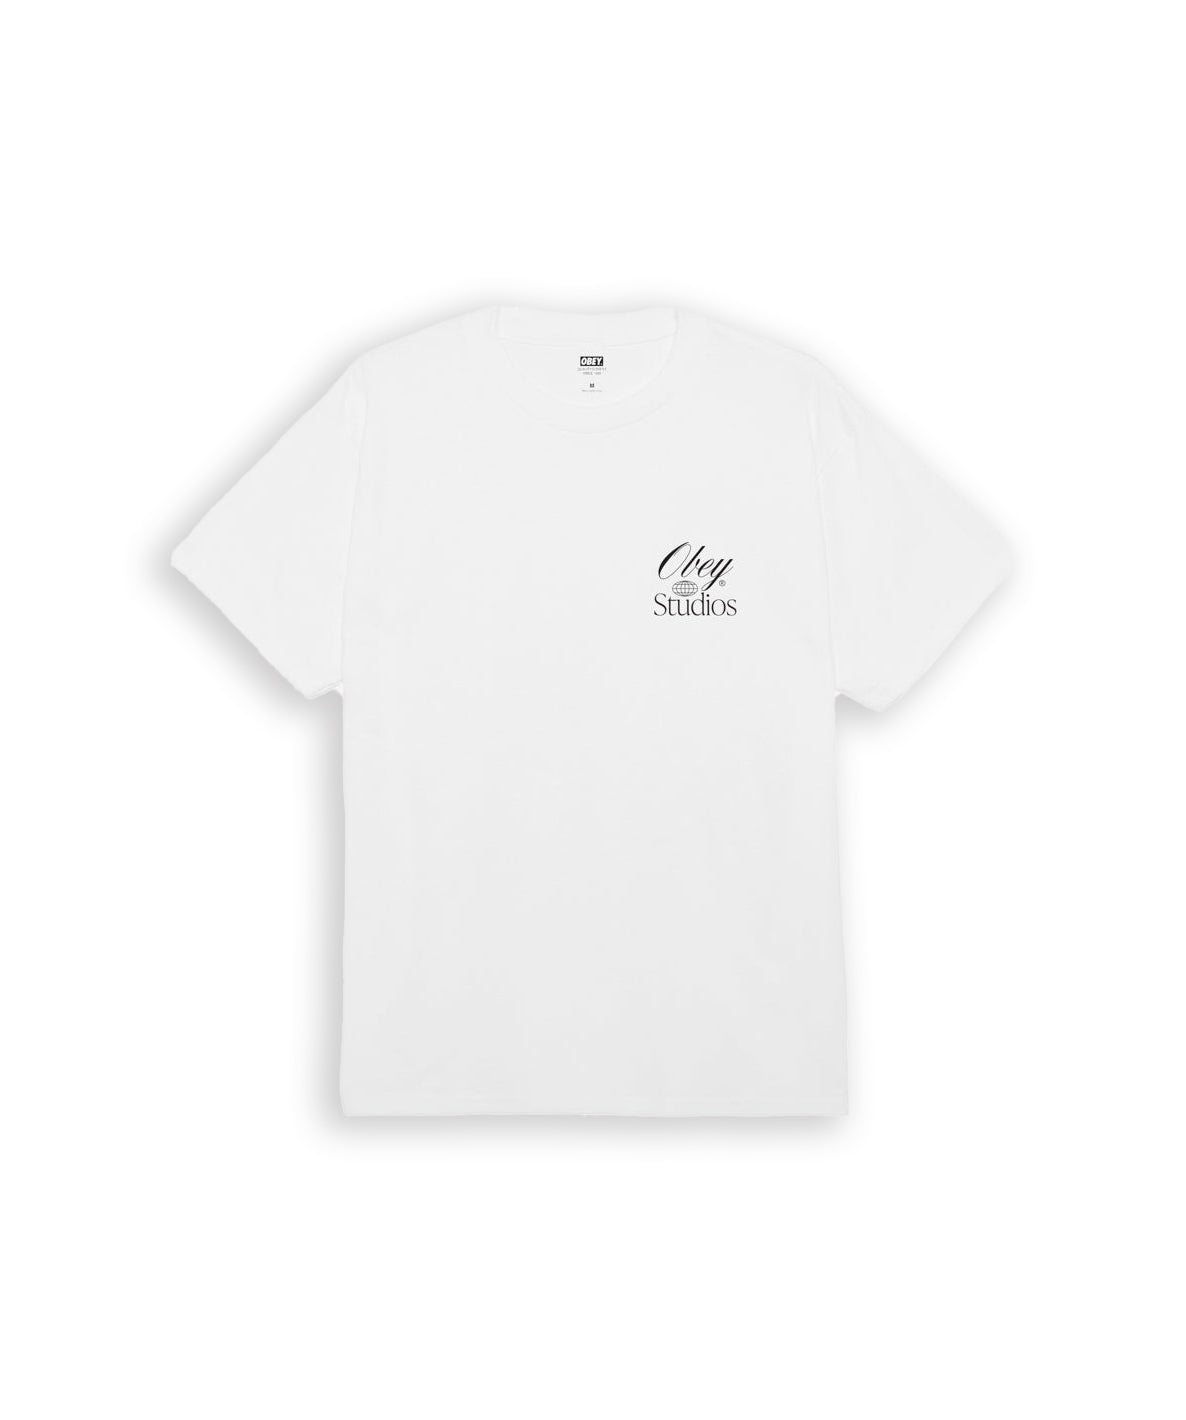 Obey Studios Worldwide T-Shirt Bianca